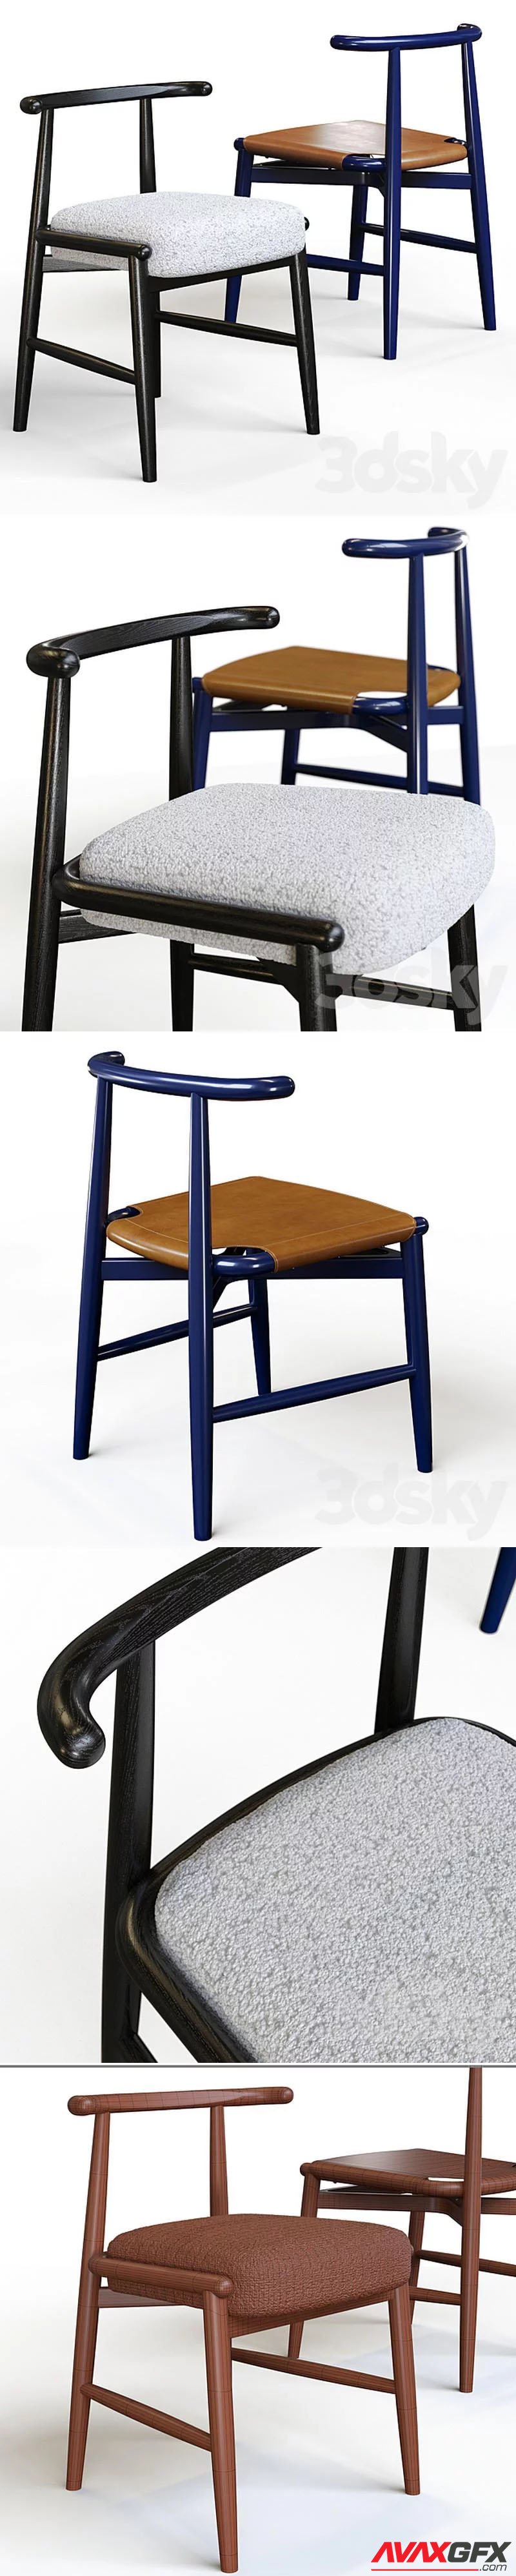 Chairs Meridiani Emilia Kuoio – 3D Model